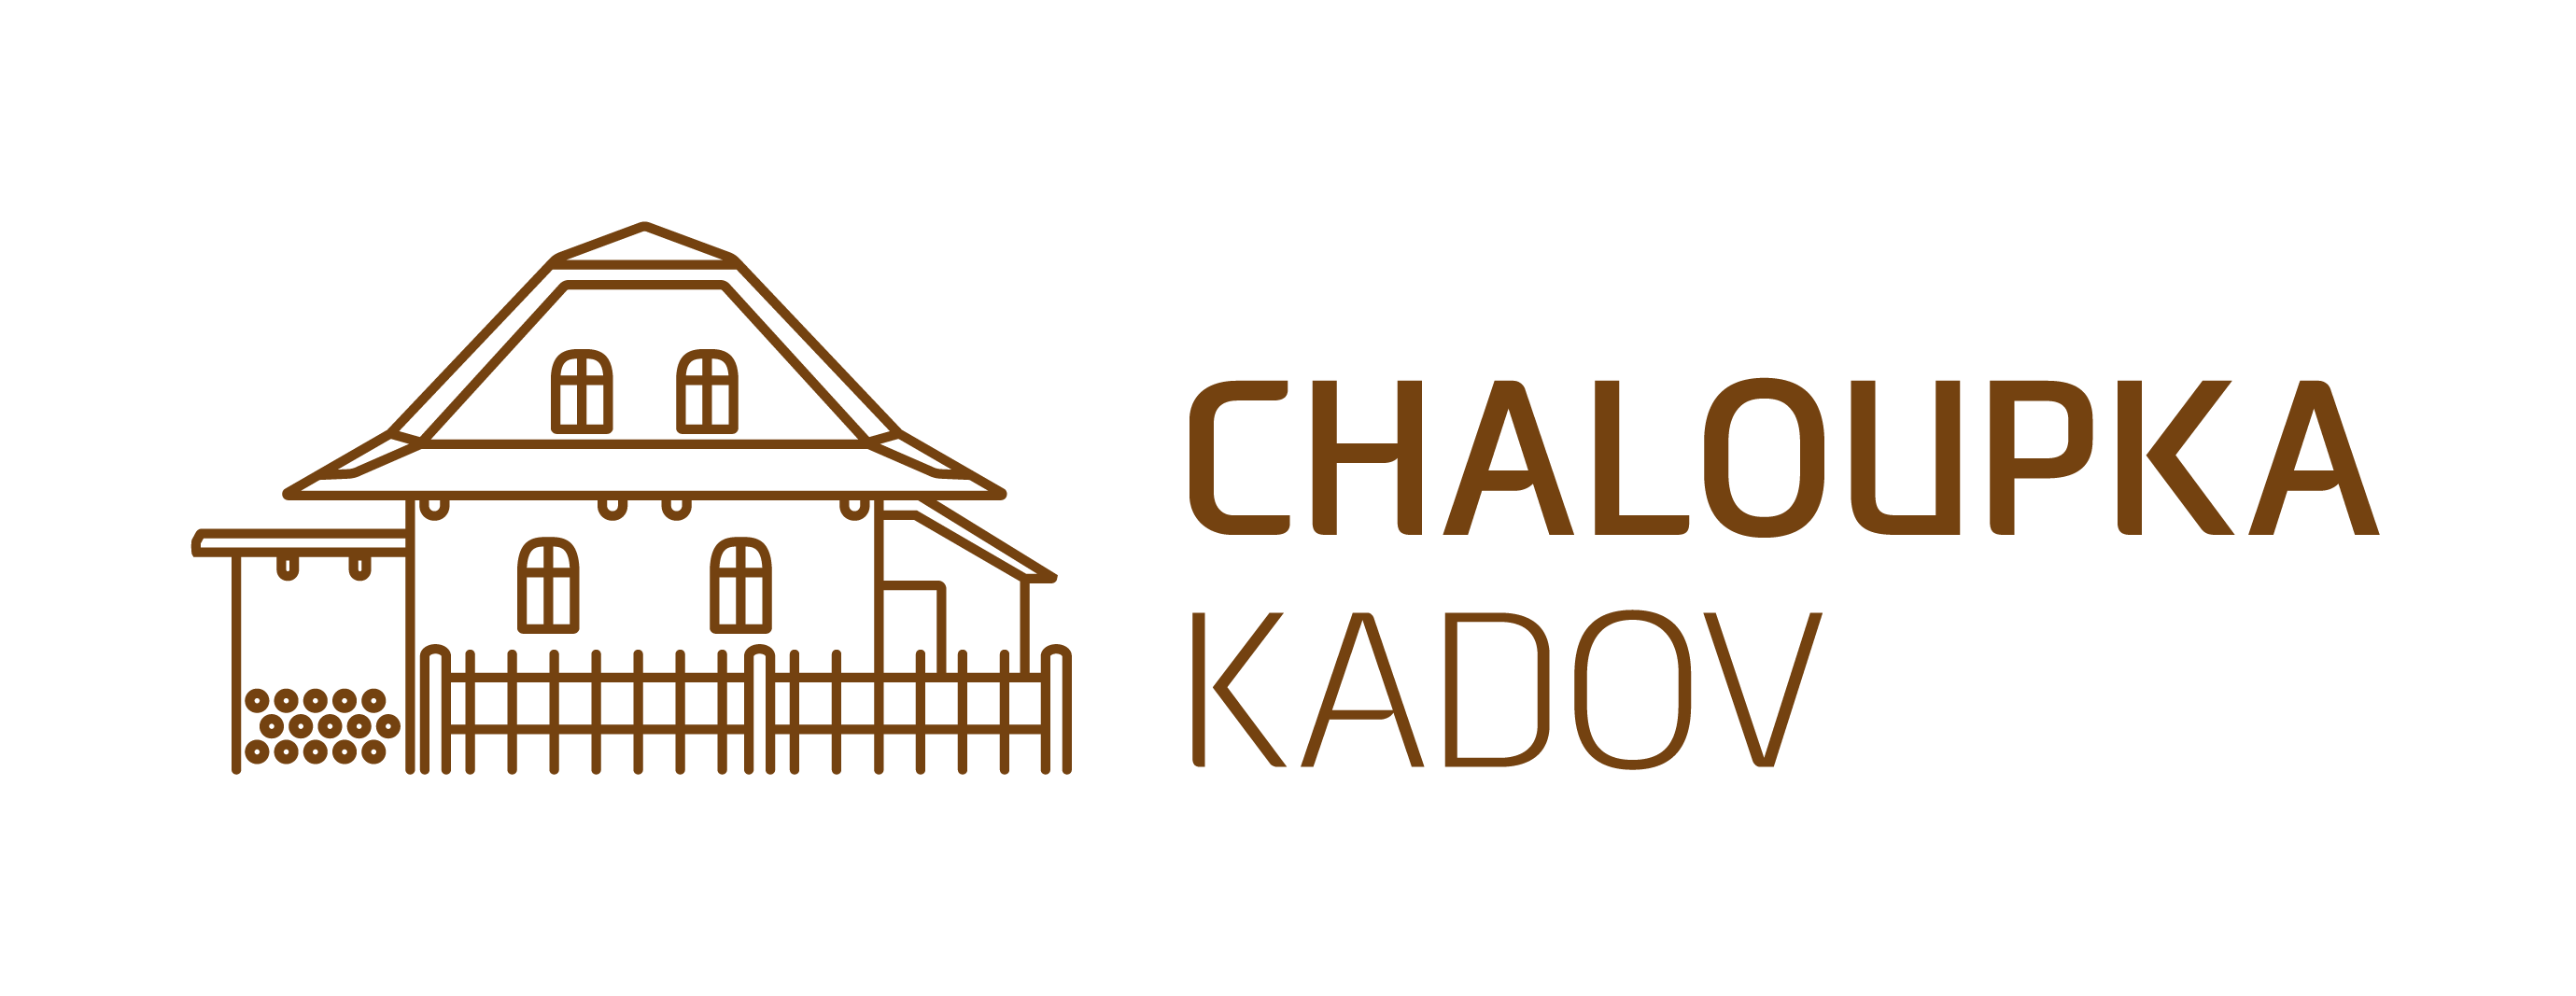 Chaloupka Kadov